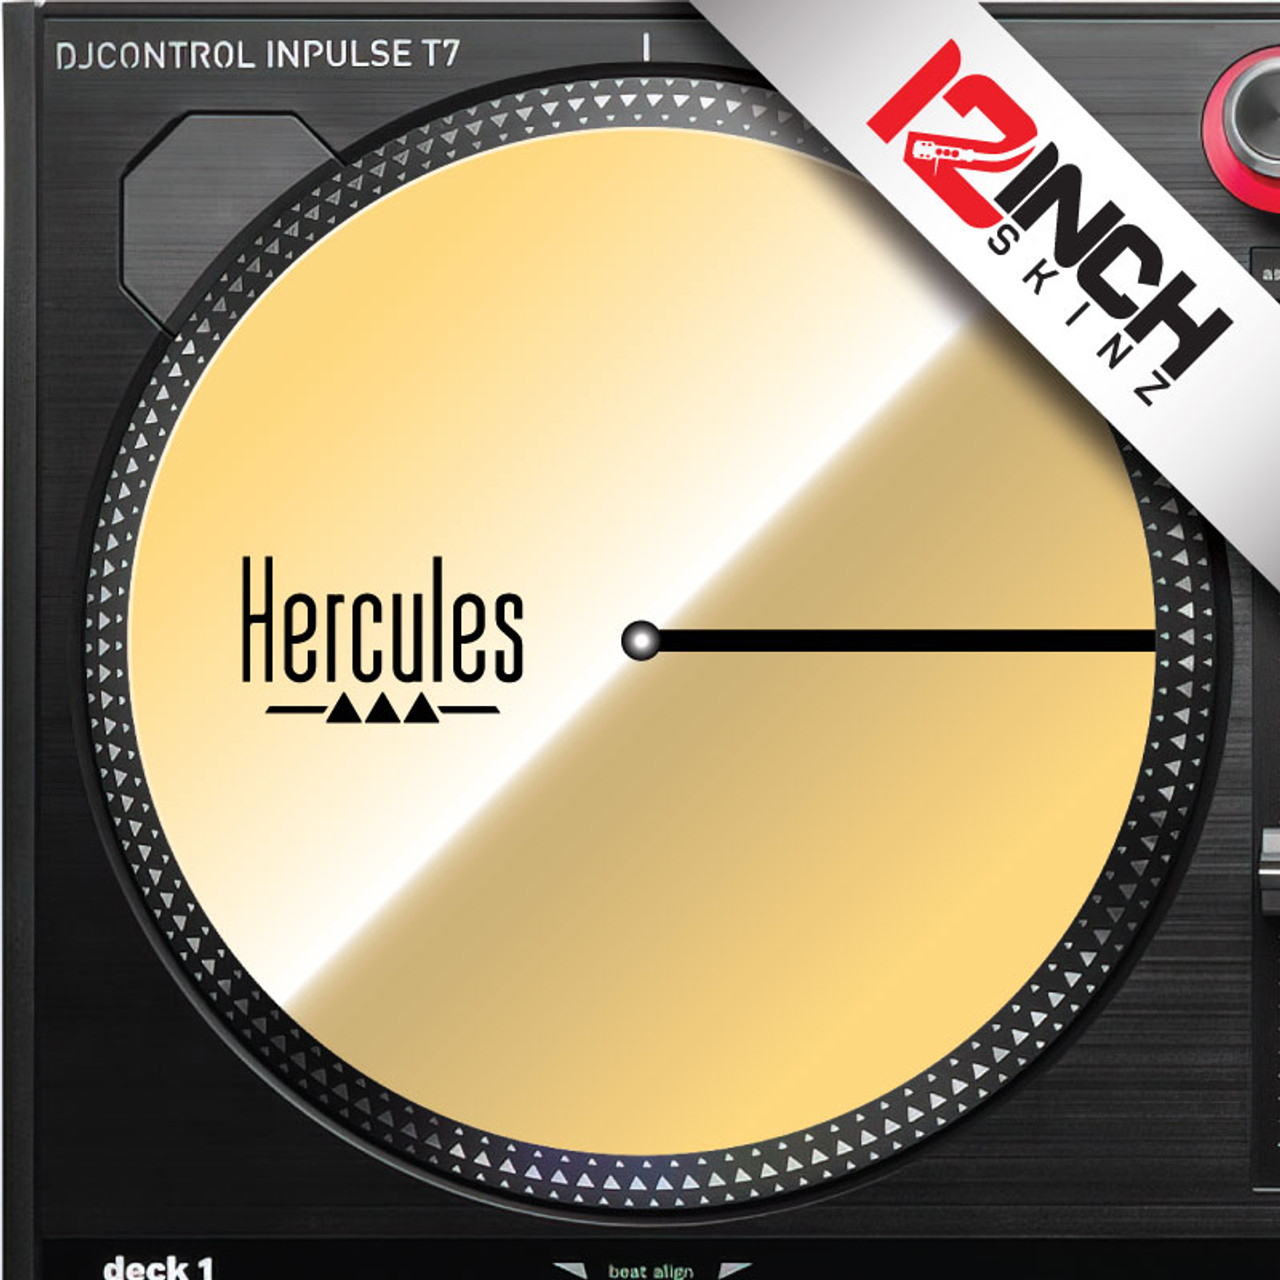 Hercules DJcontrol Inpulse T7 Review